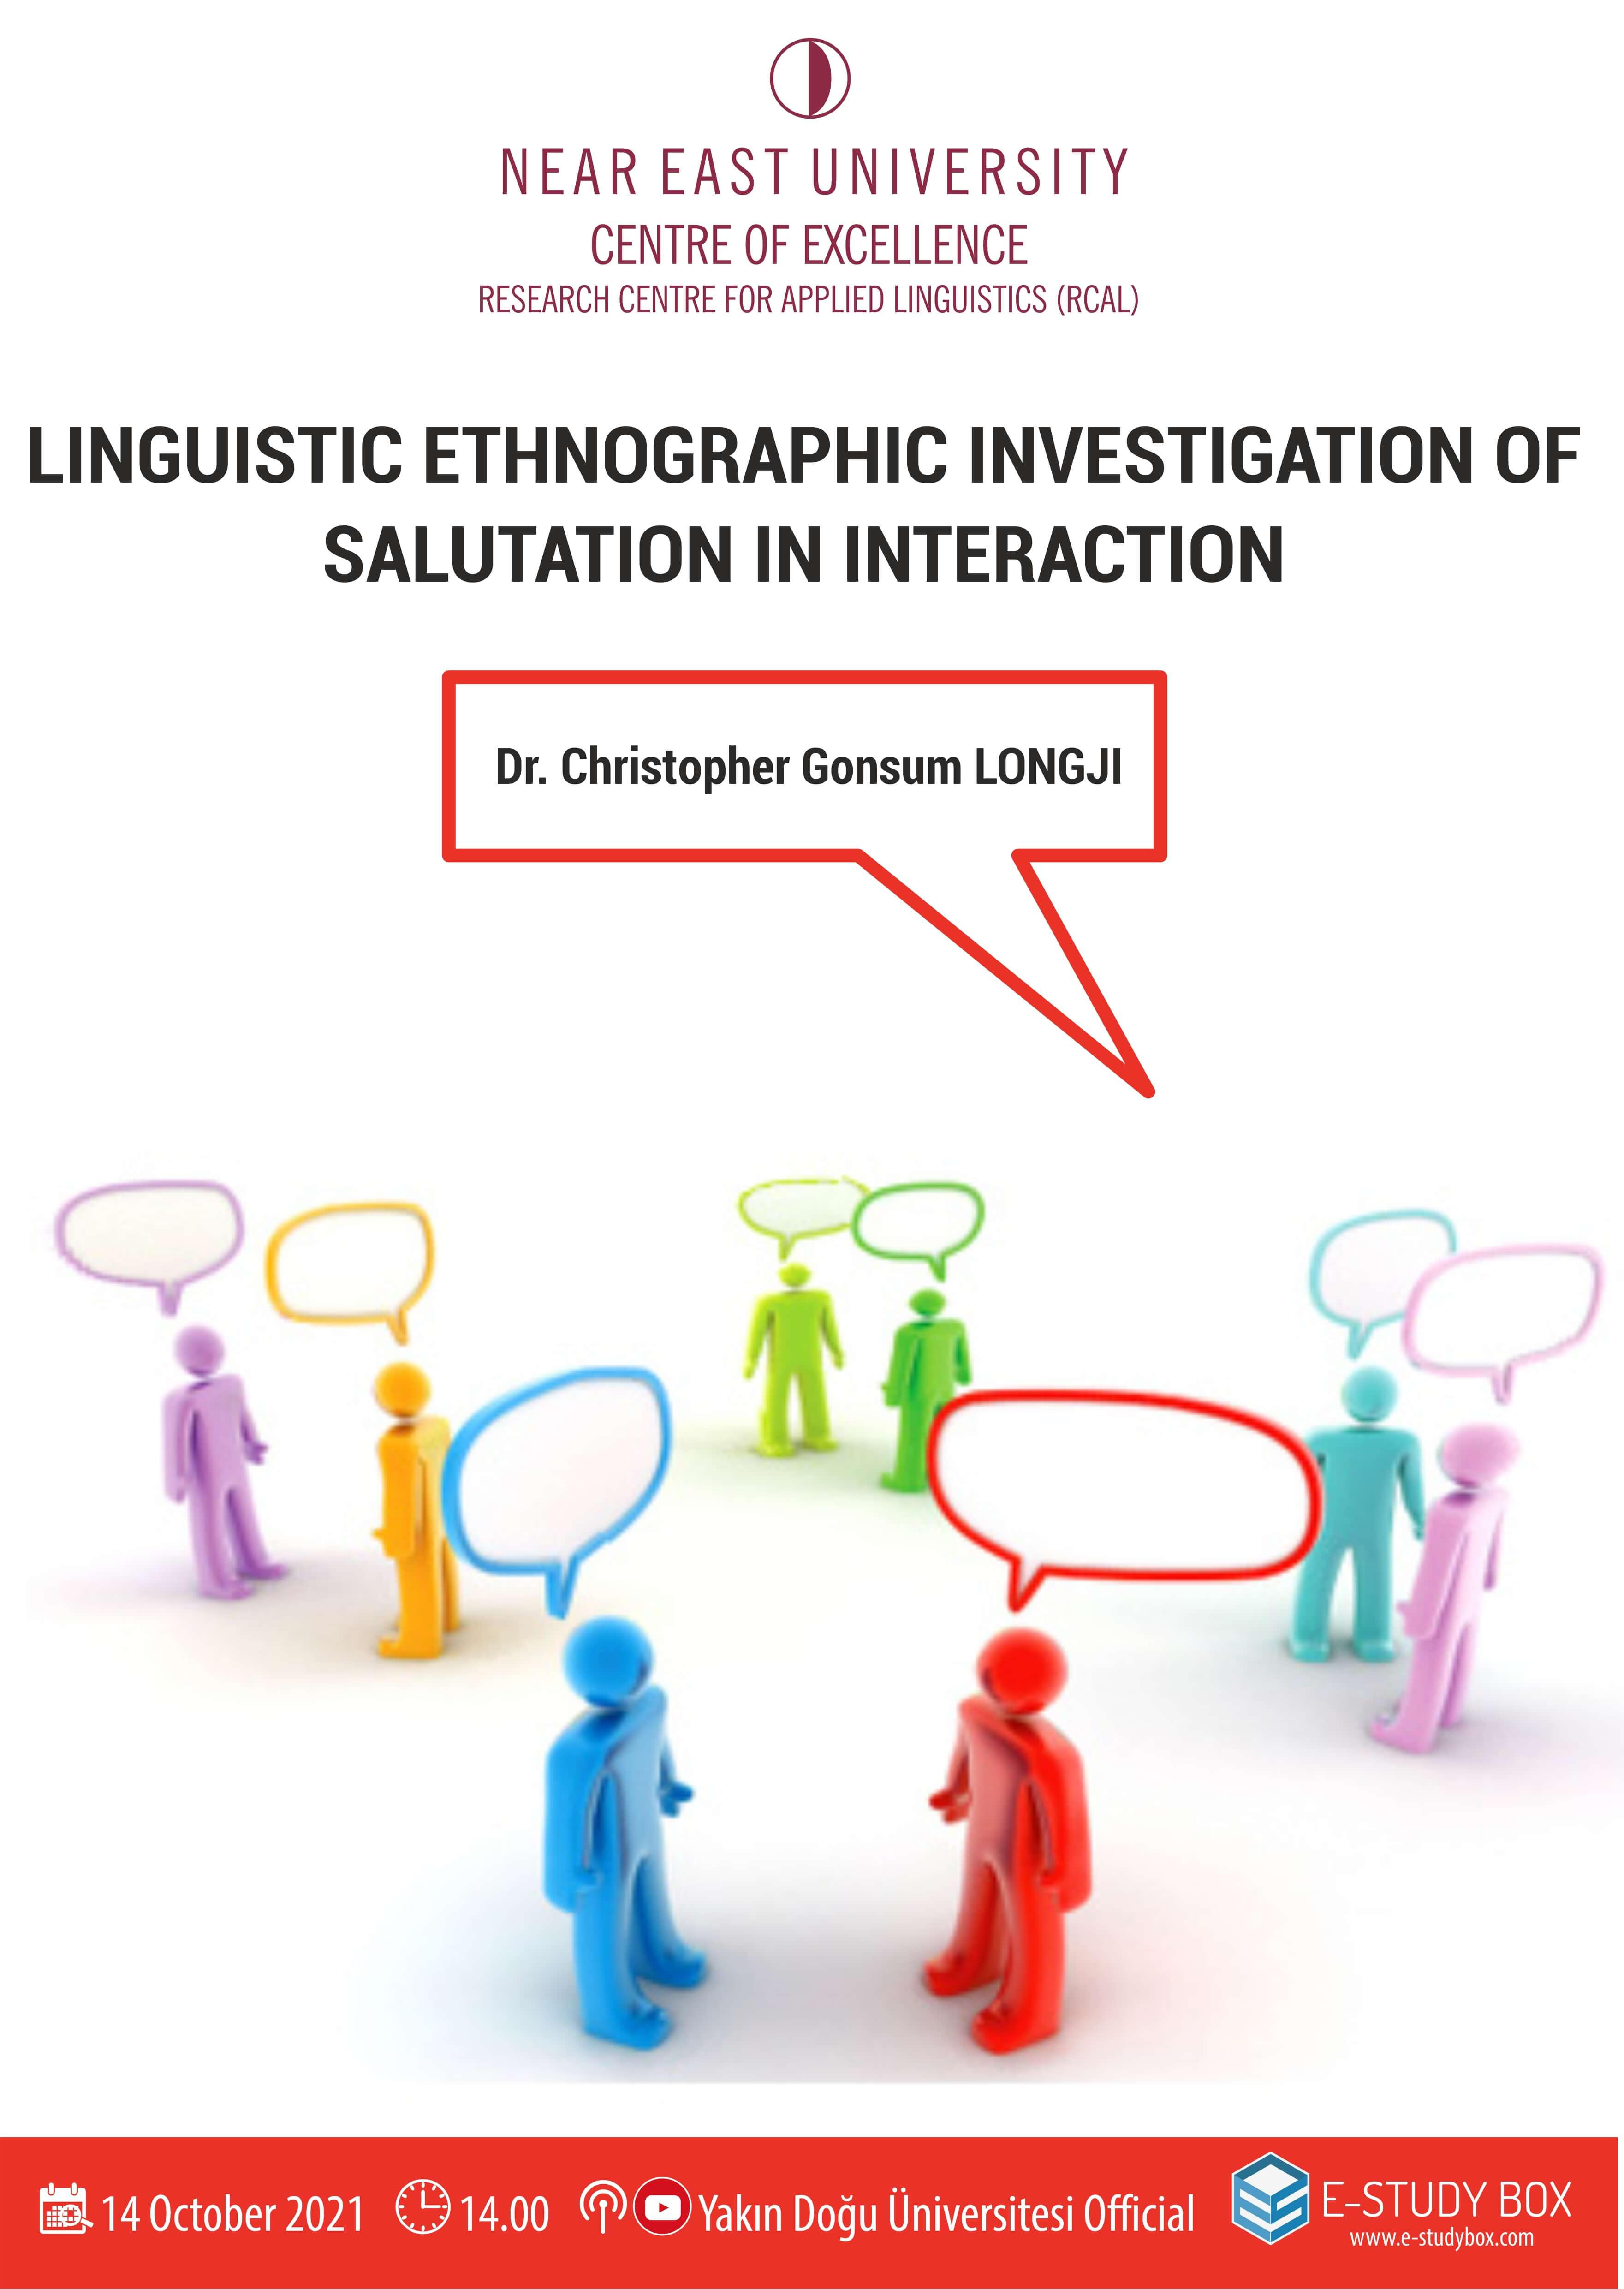 {mlang en}Linguistic Ethnographic Investigation of Salutation in Interaction{mlang}{mlang tr}Etkileşimde Selamlaşmanın Dilbilimsel Etnografik İncelemesi{mlang}